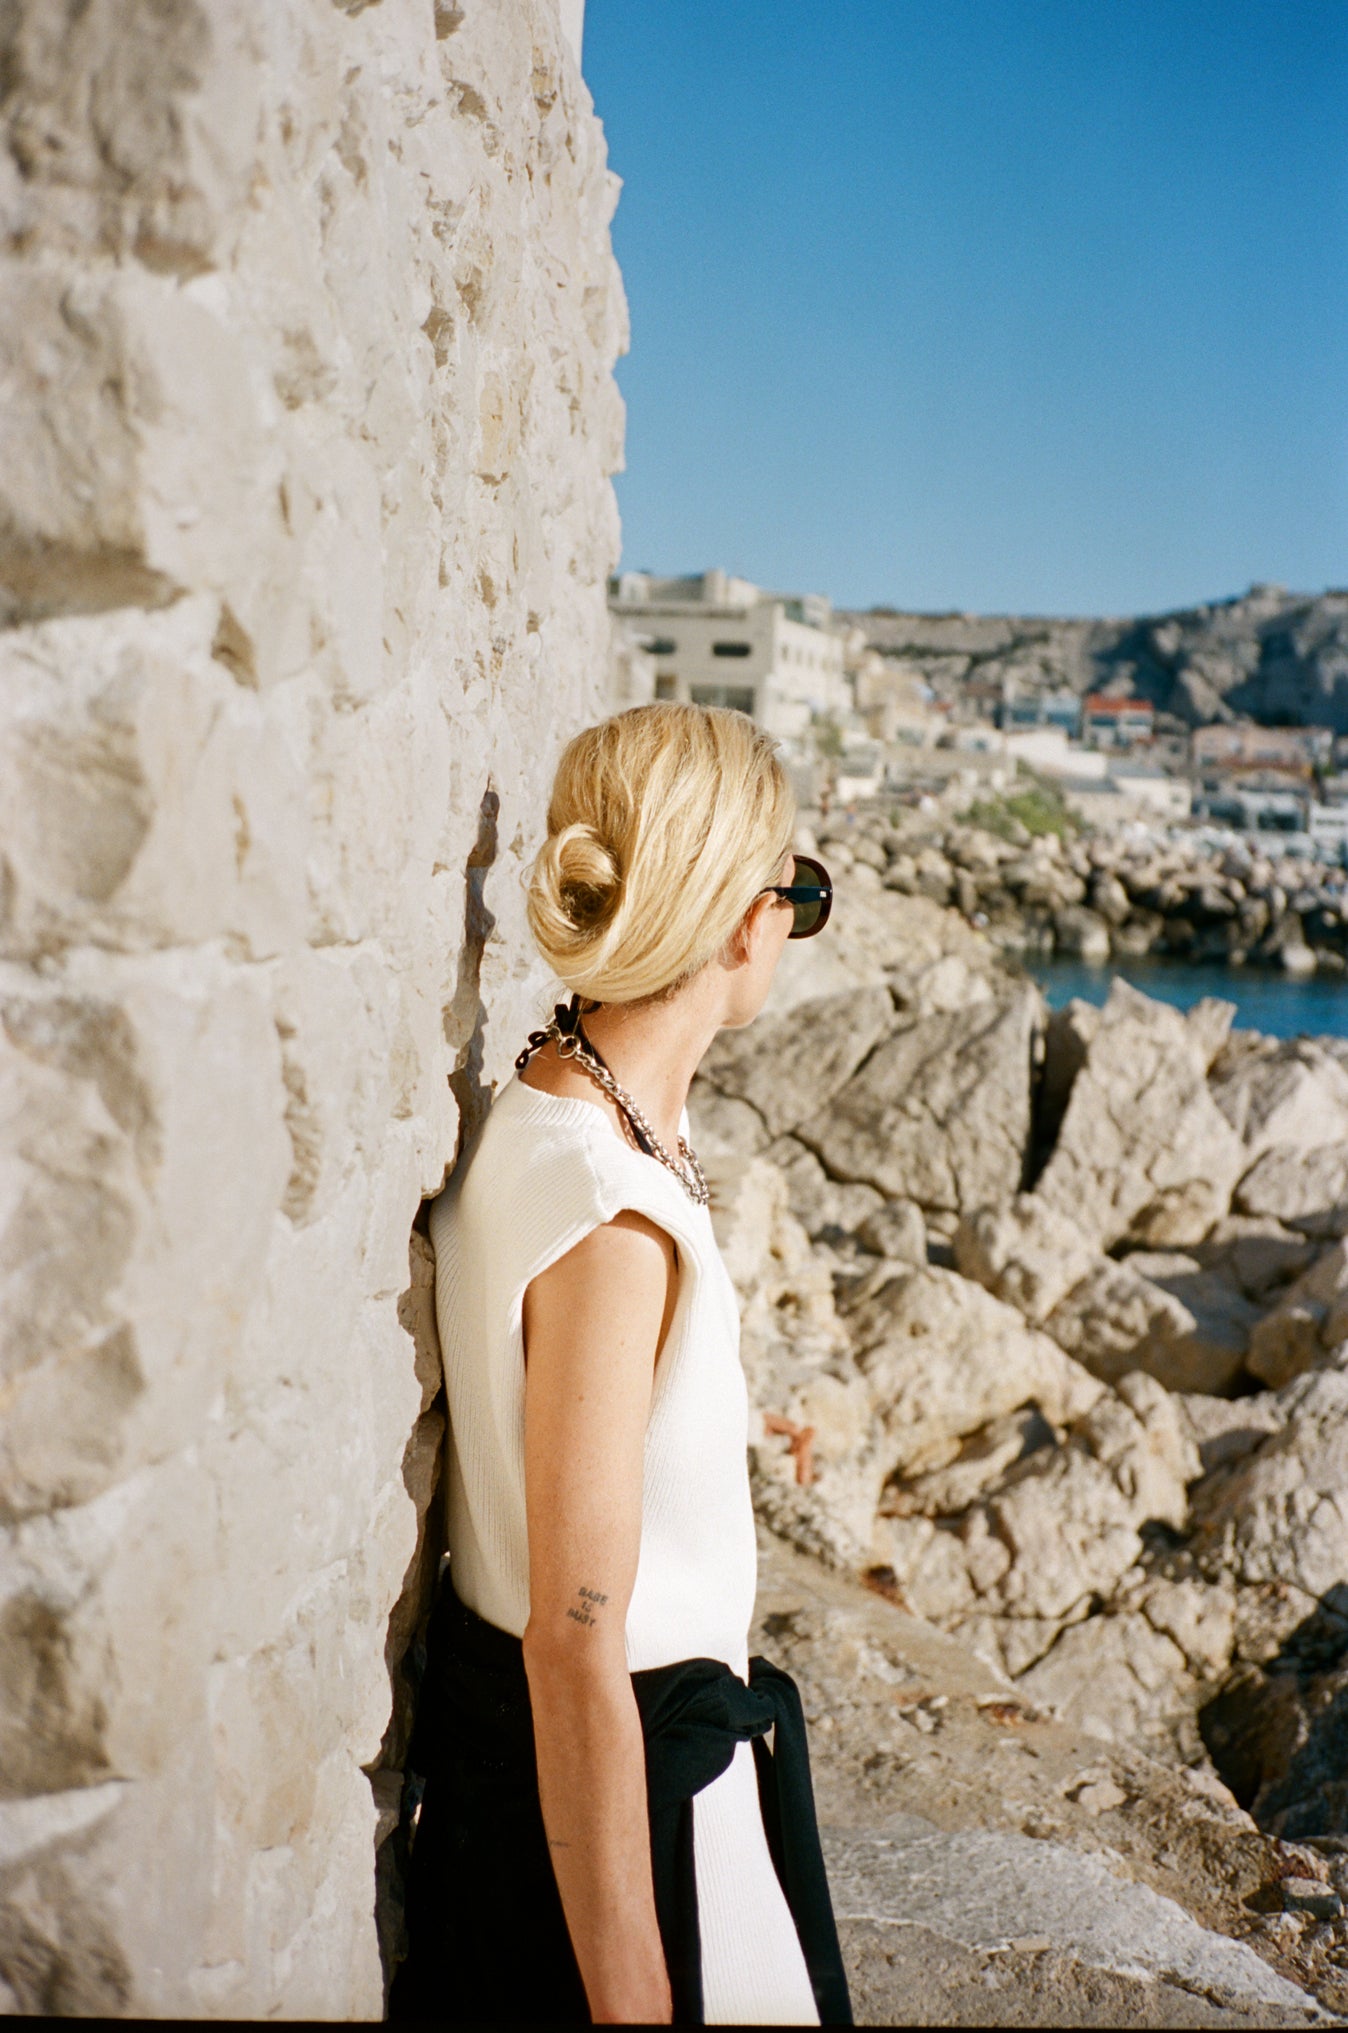 Erin Wasson wearing the Wren Sleeveless knit dress. Photographed by Diane Bartlett in Marseille.